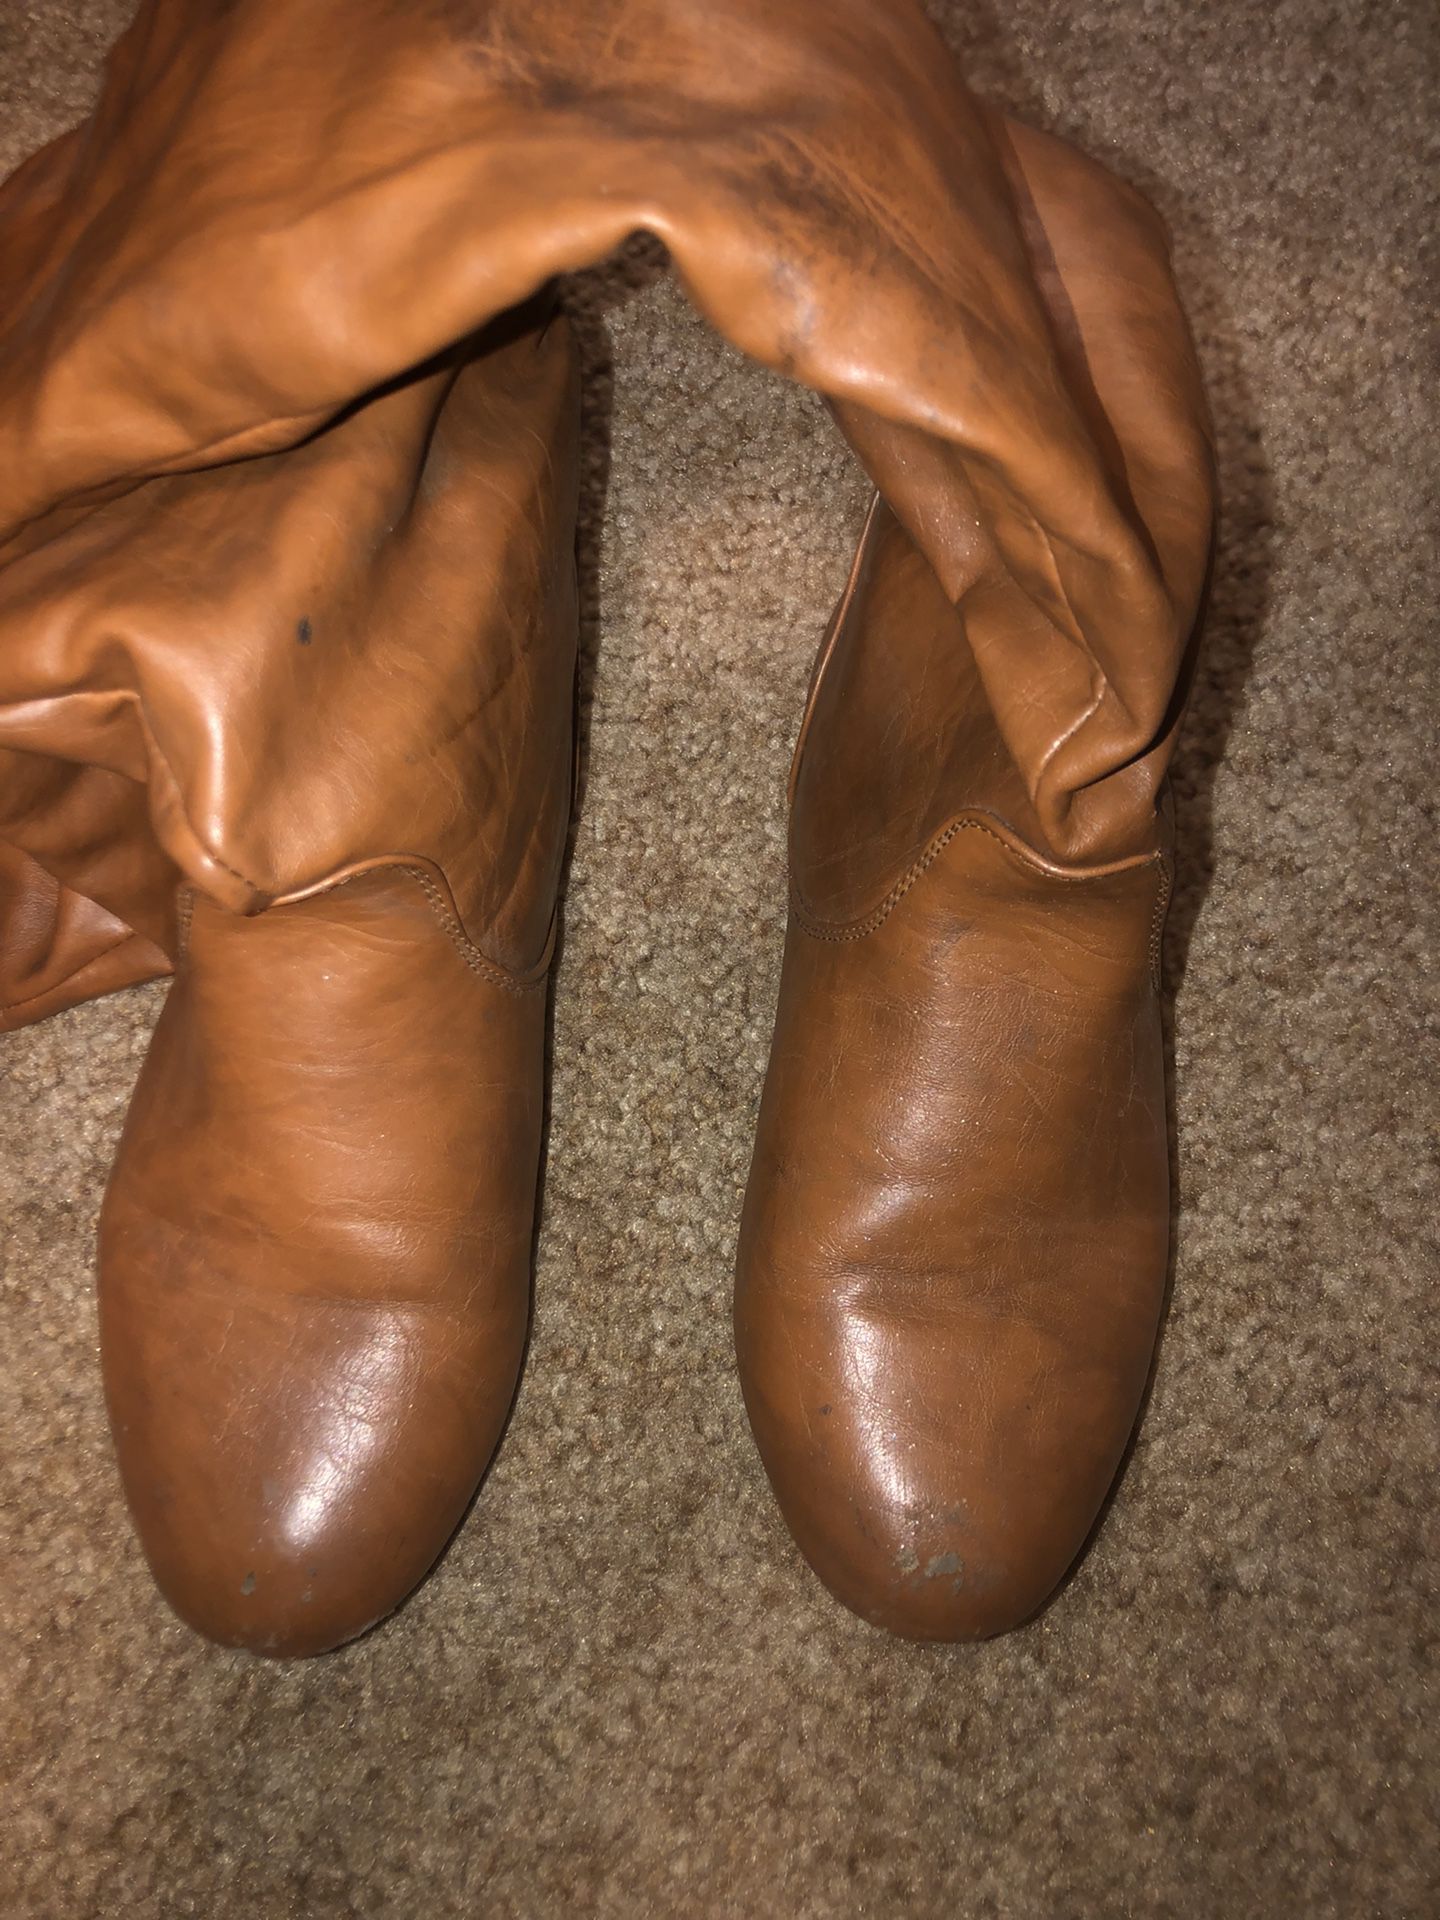 Brown Thigh High Boots - Size 7 1/2 - CHEAP!!!